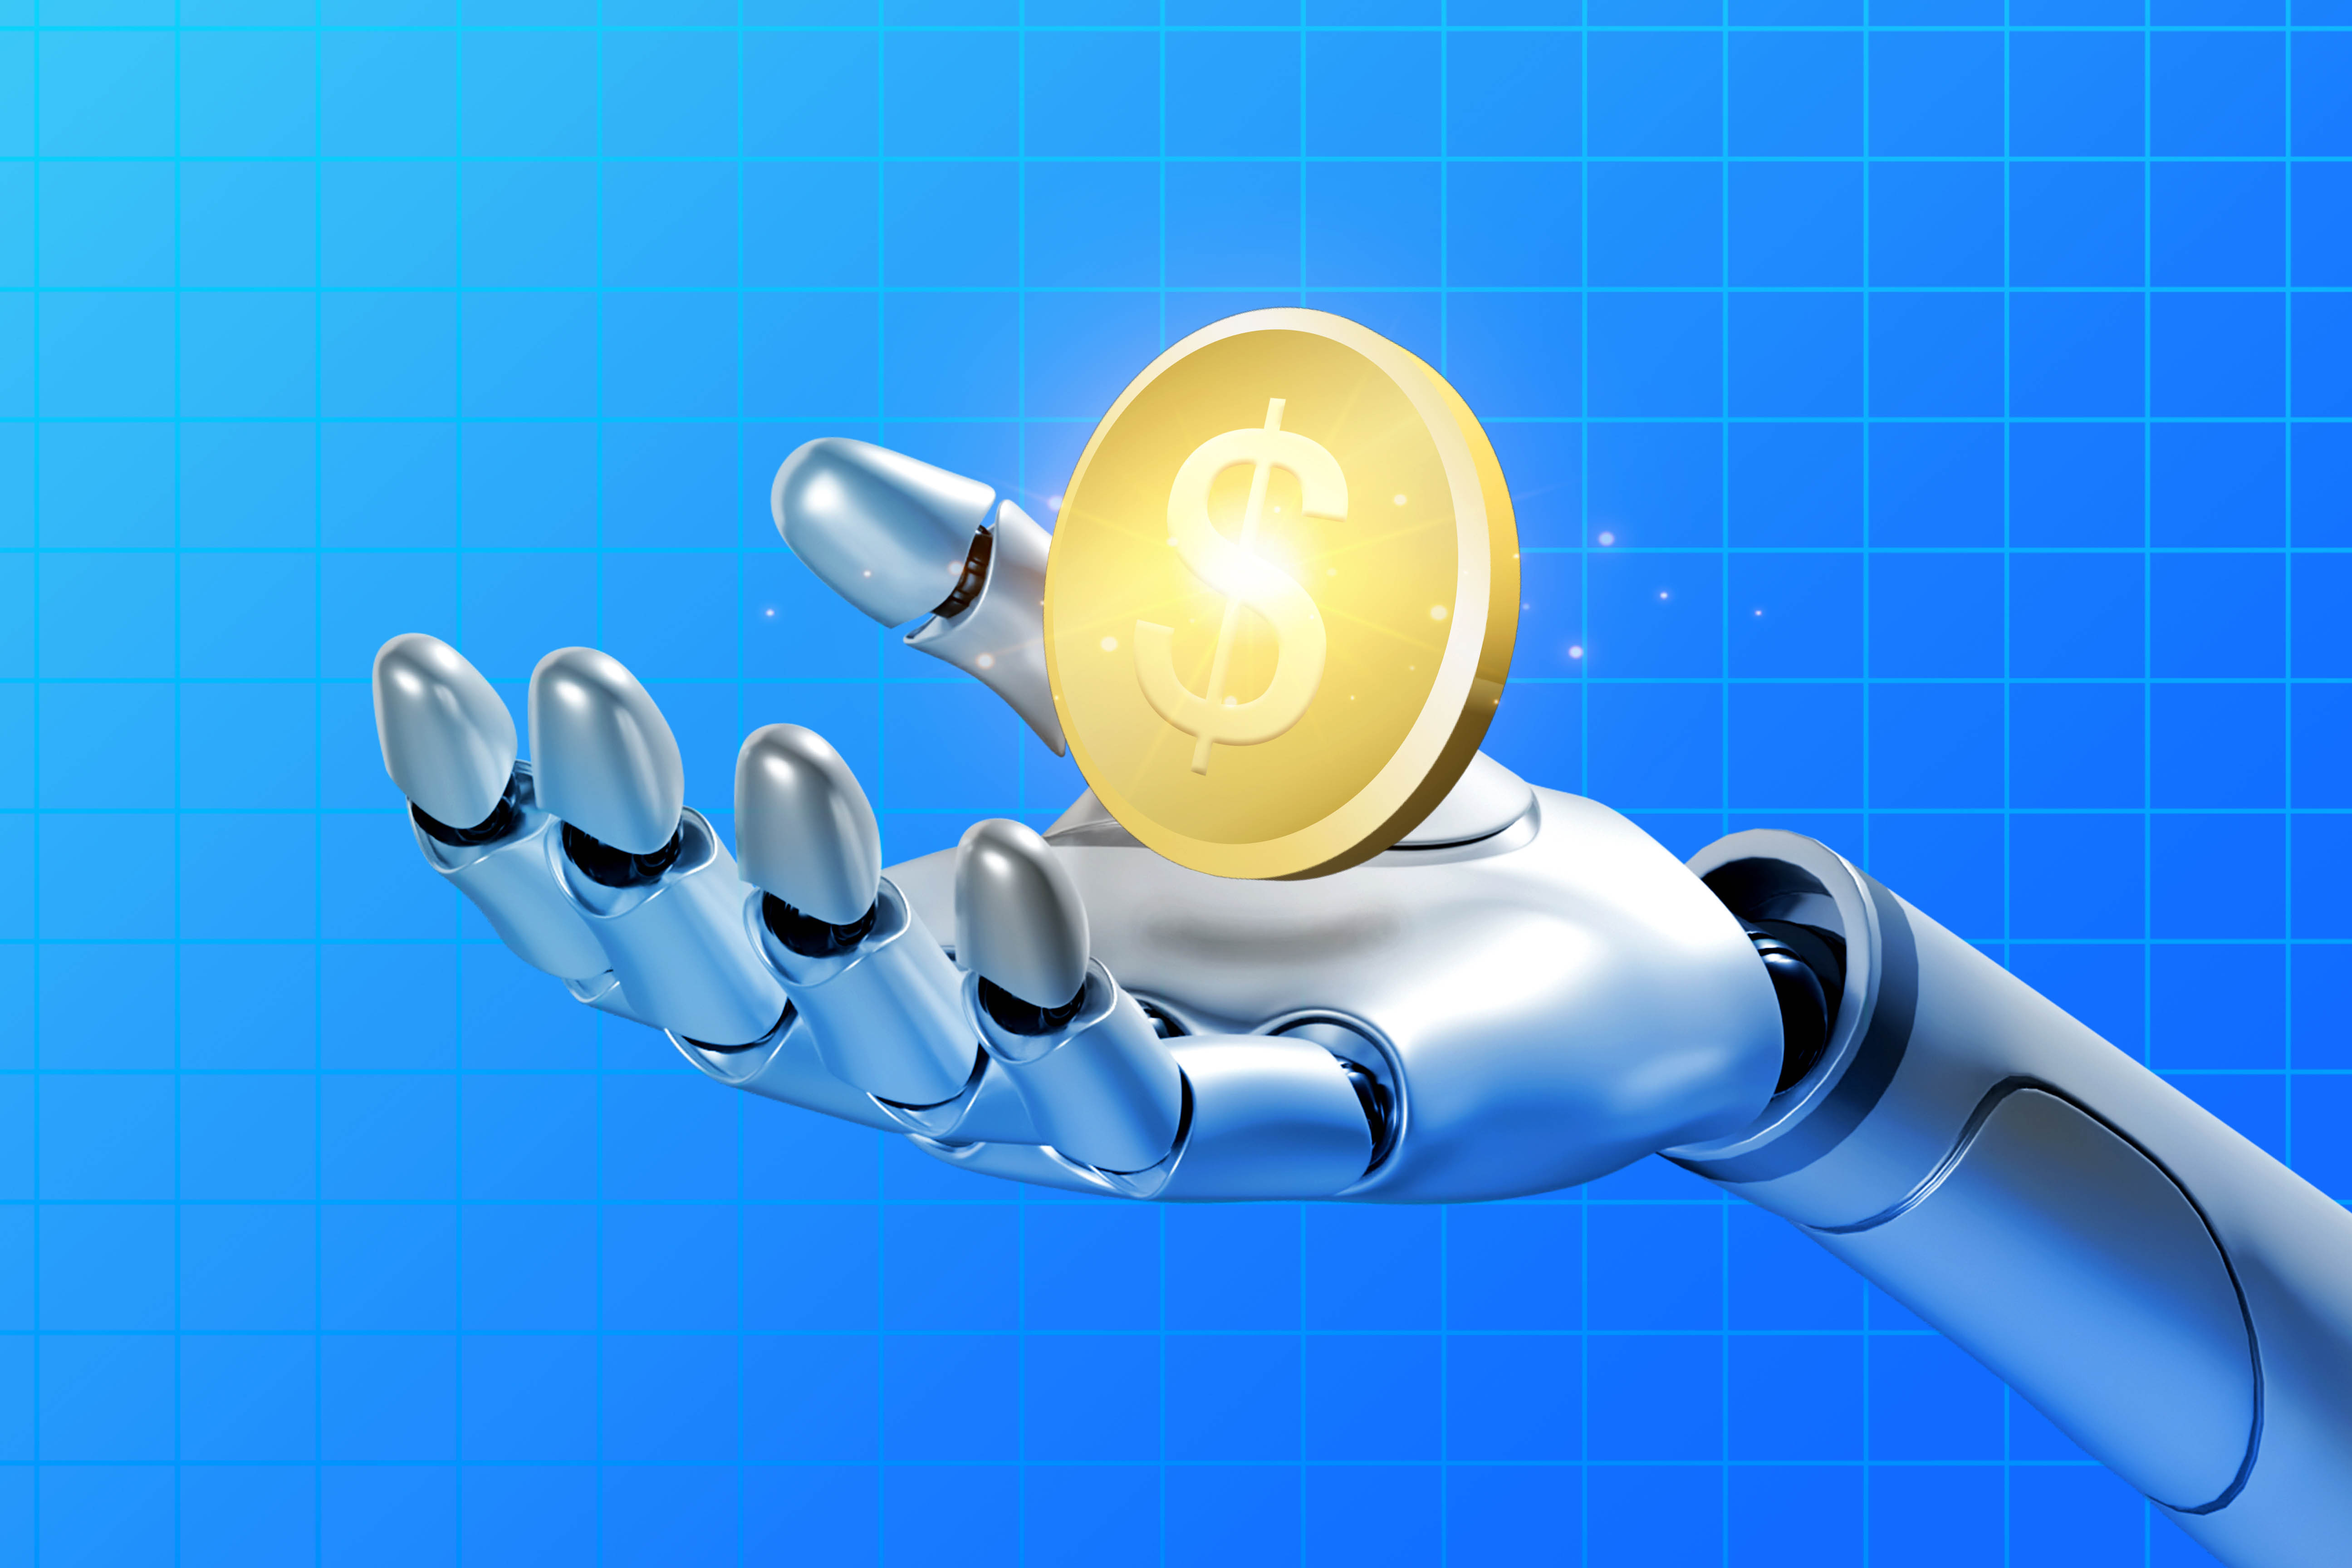 Robot hand holding a coin